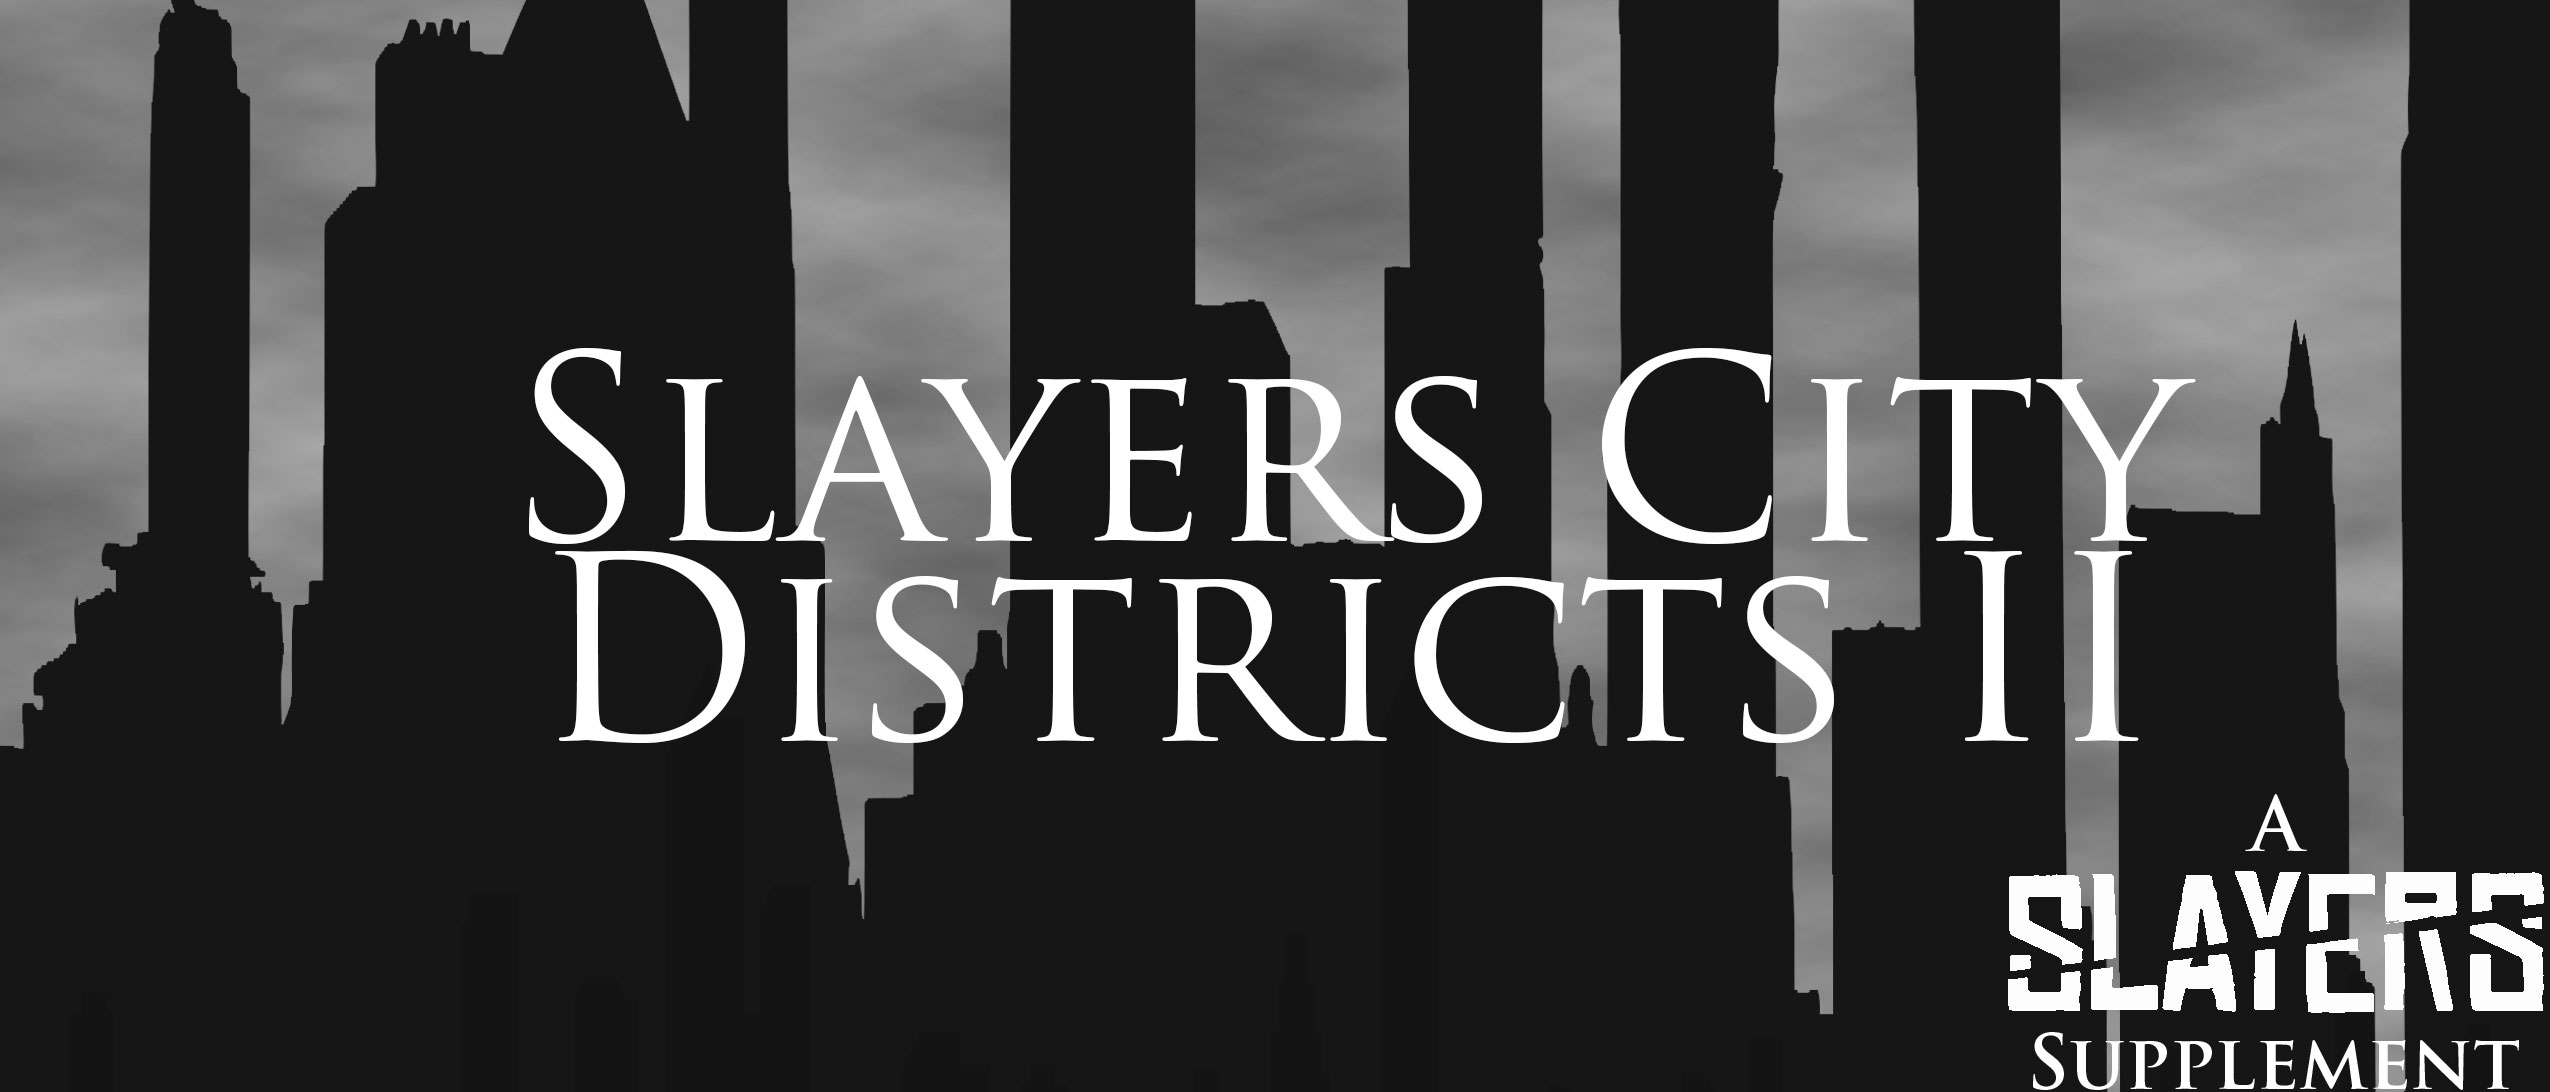 Slayers City Districts II